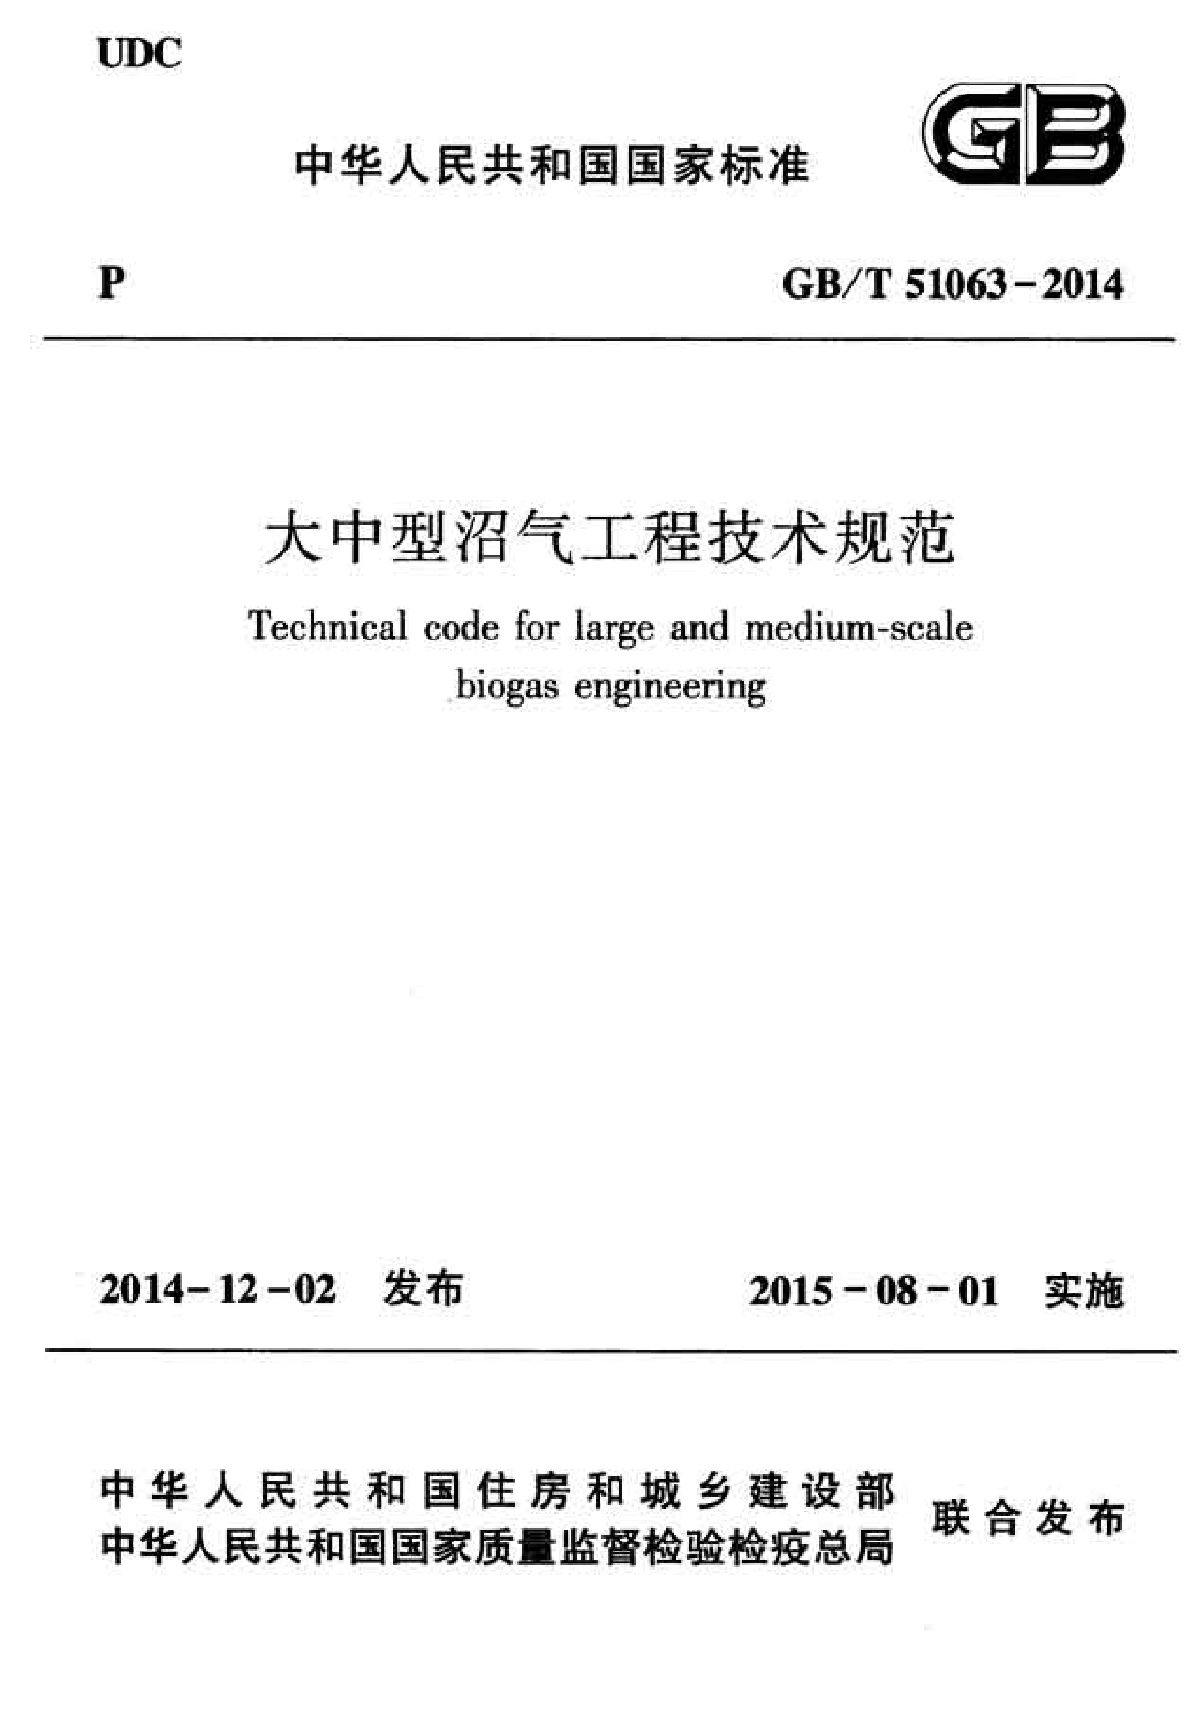 GBT51063-2014大中型沼气工程技术规范